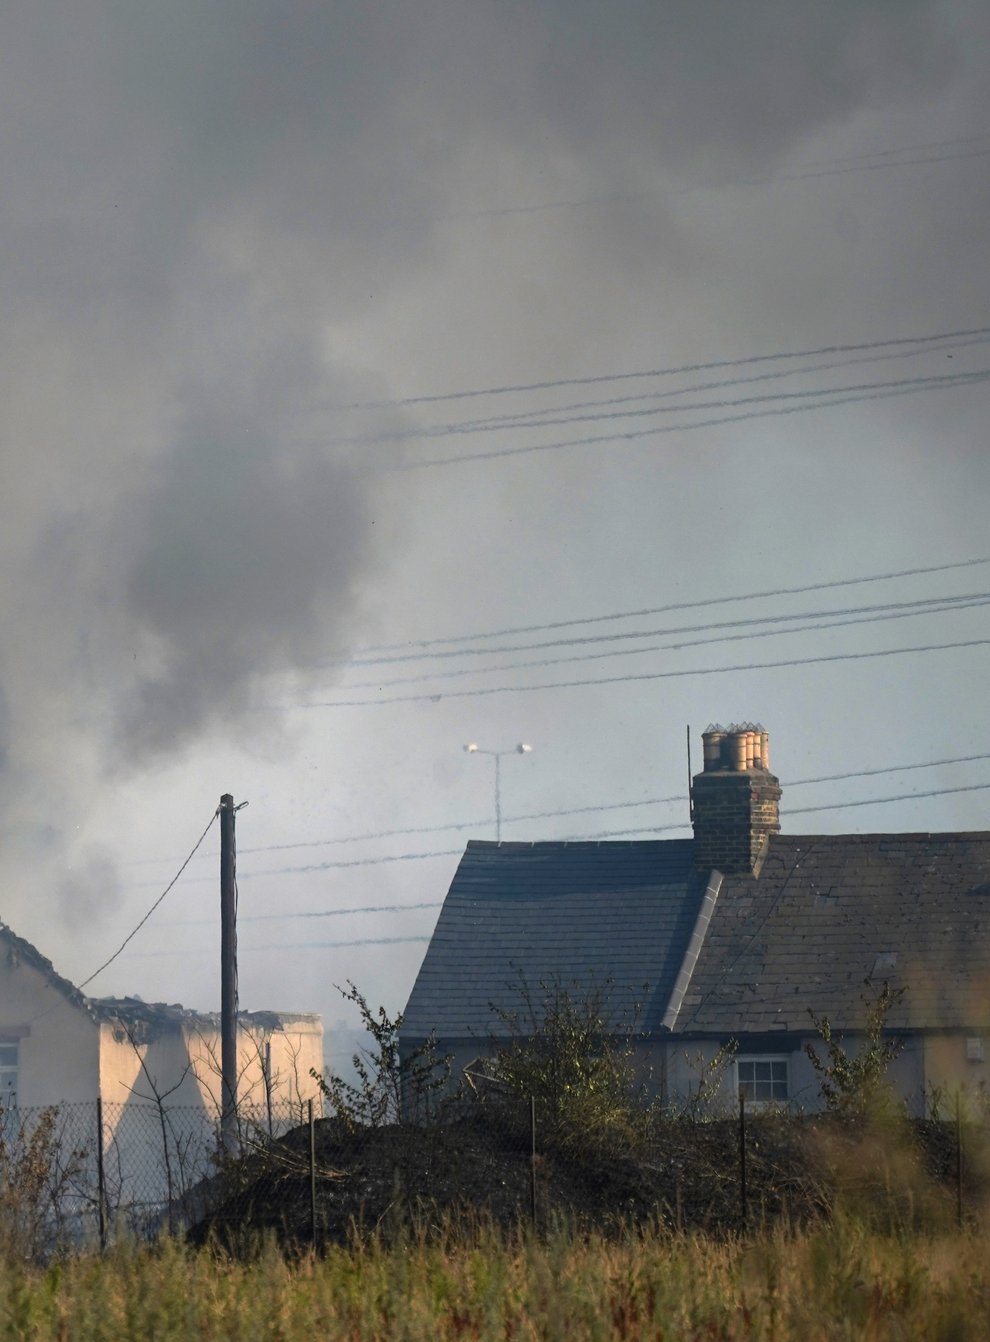 The major a blaze in the village of Wennington, east London. (Yui Mok/PA)